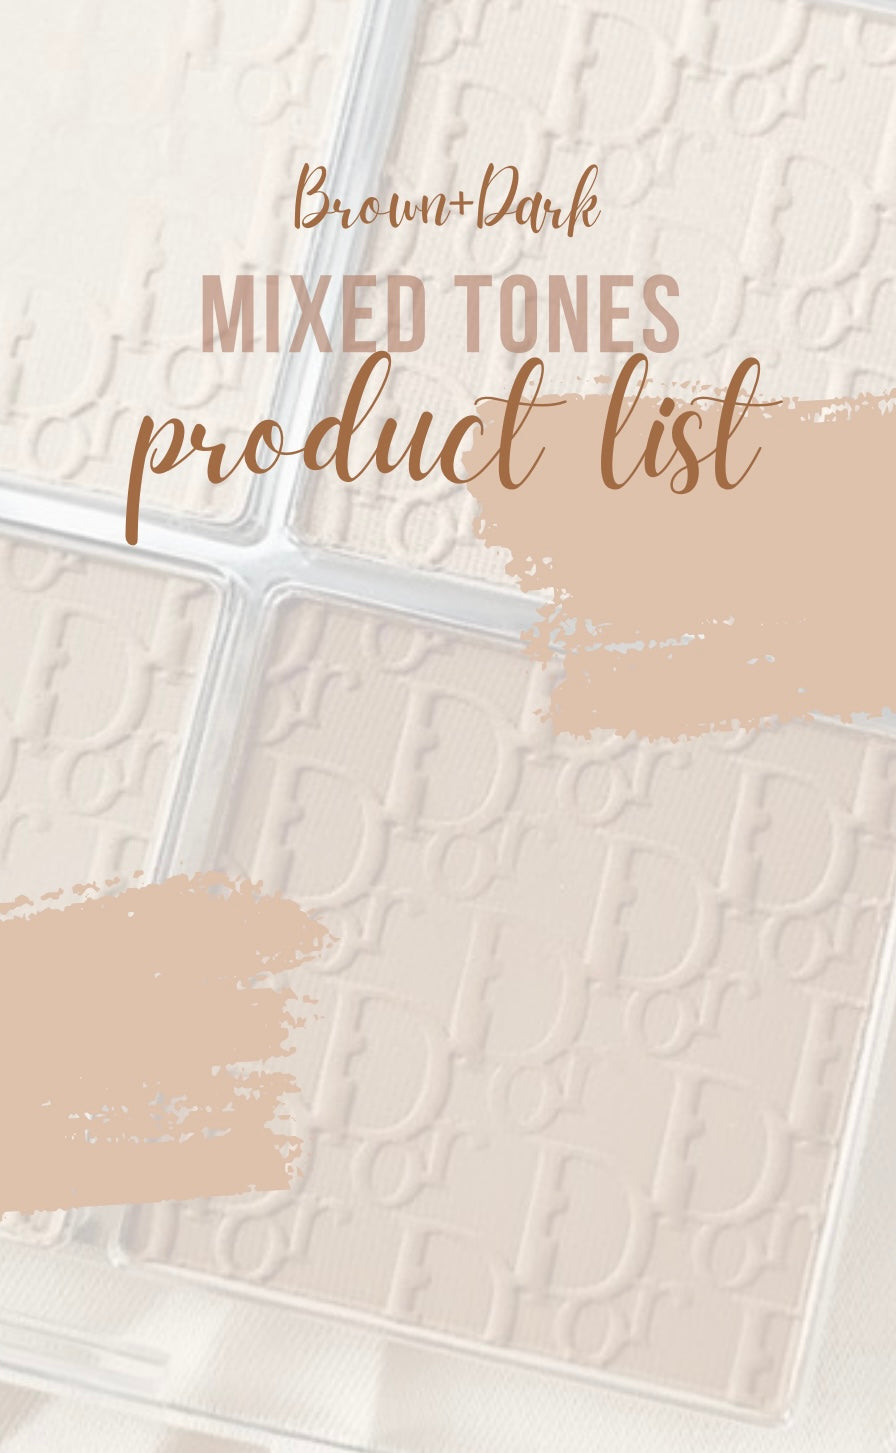 Mixed Tones (Brown+Dark) Product list